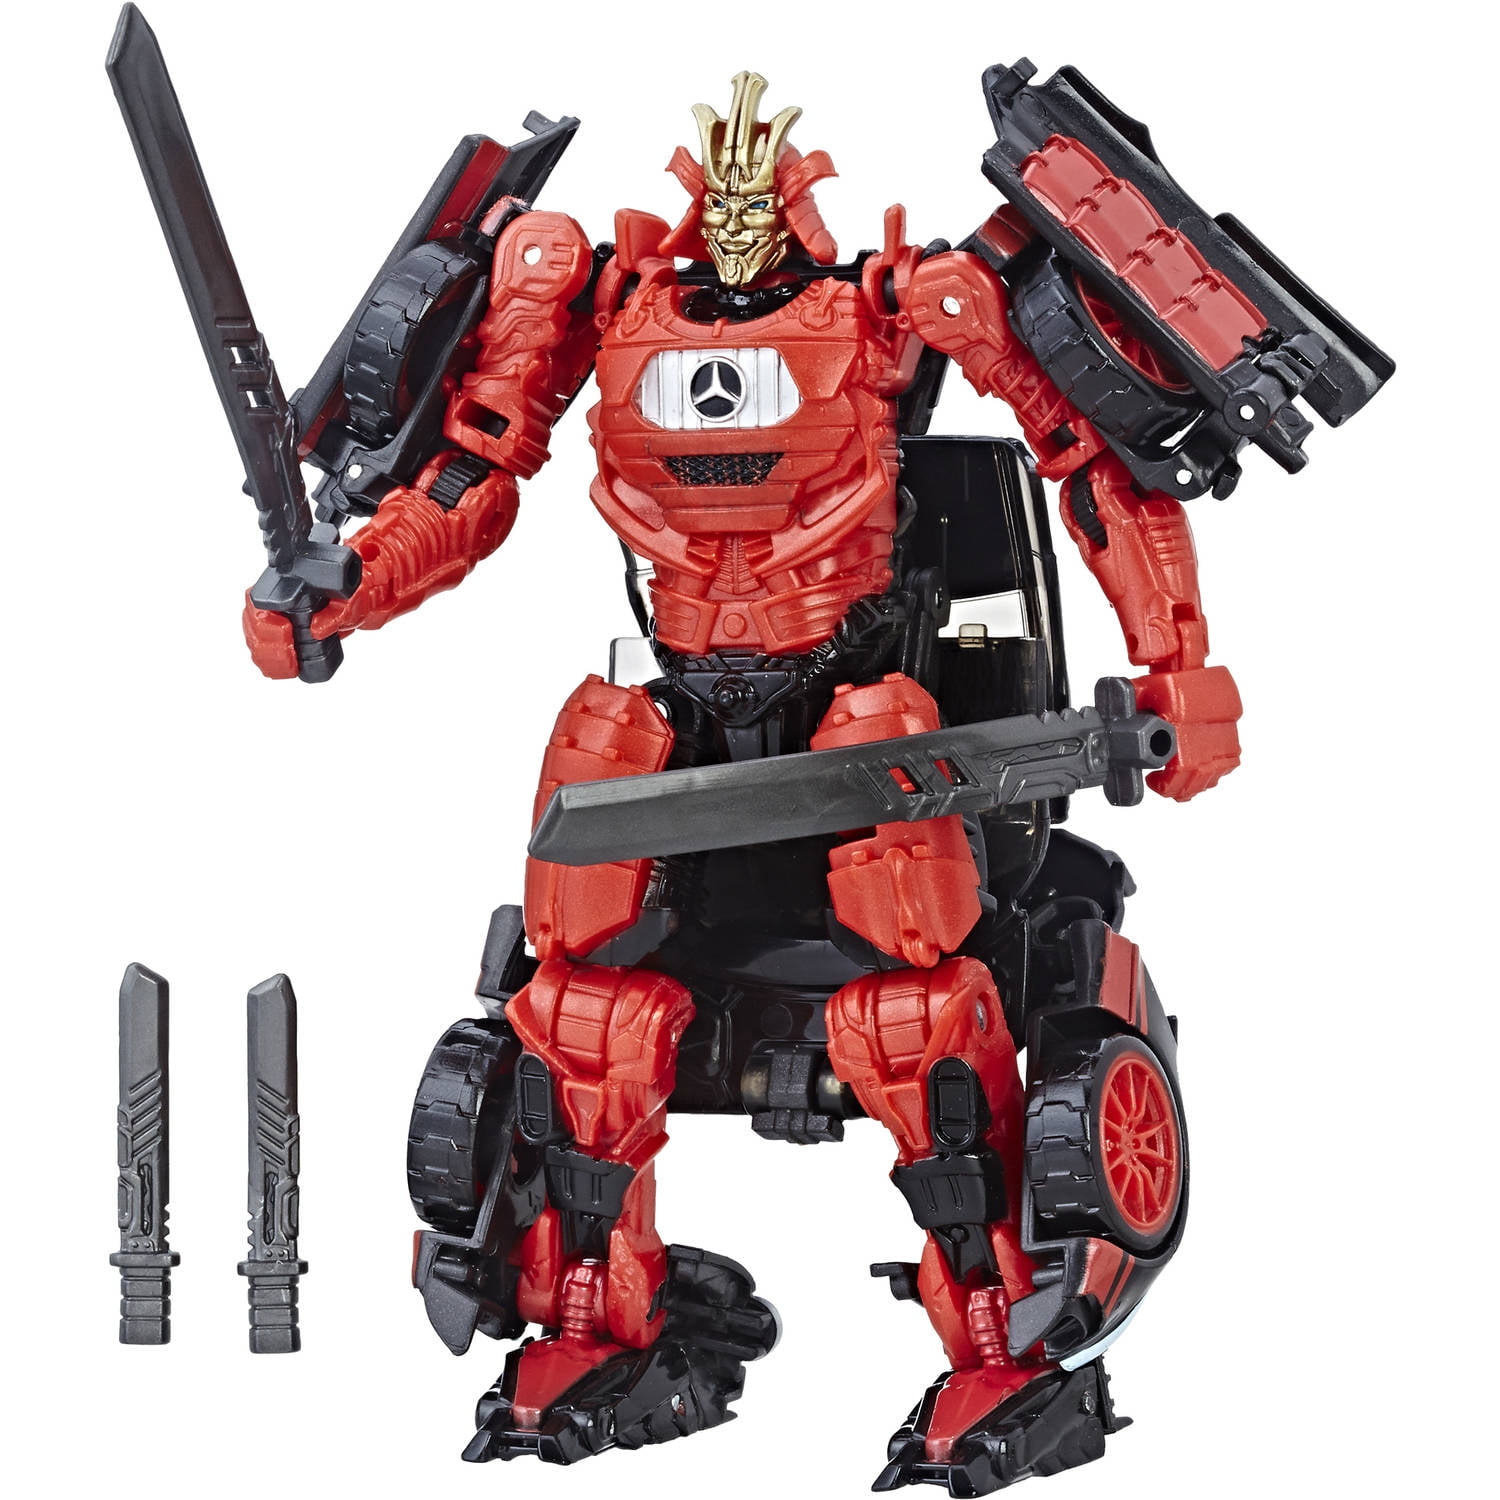 Transformers Mv5 Deluxe The Last Knight Steelbane for sale online 